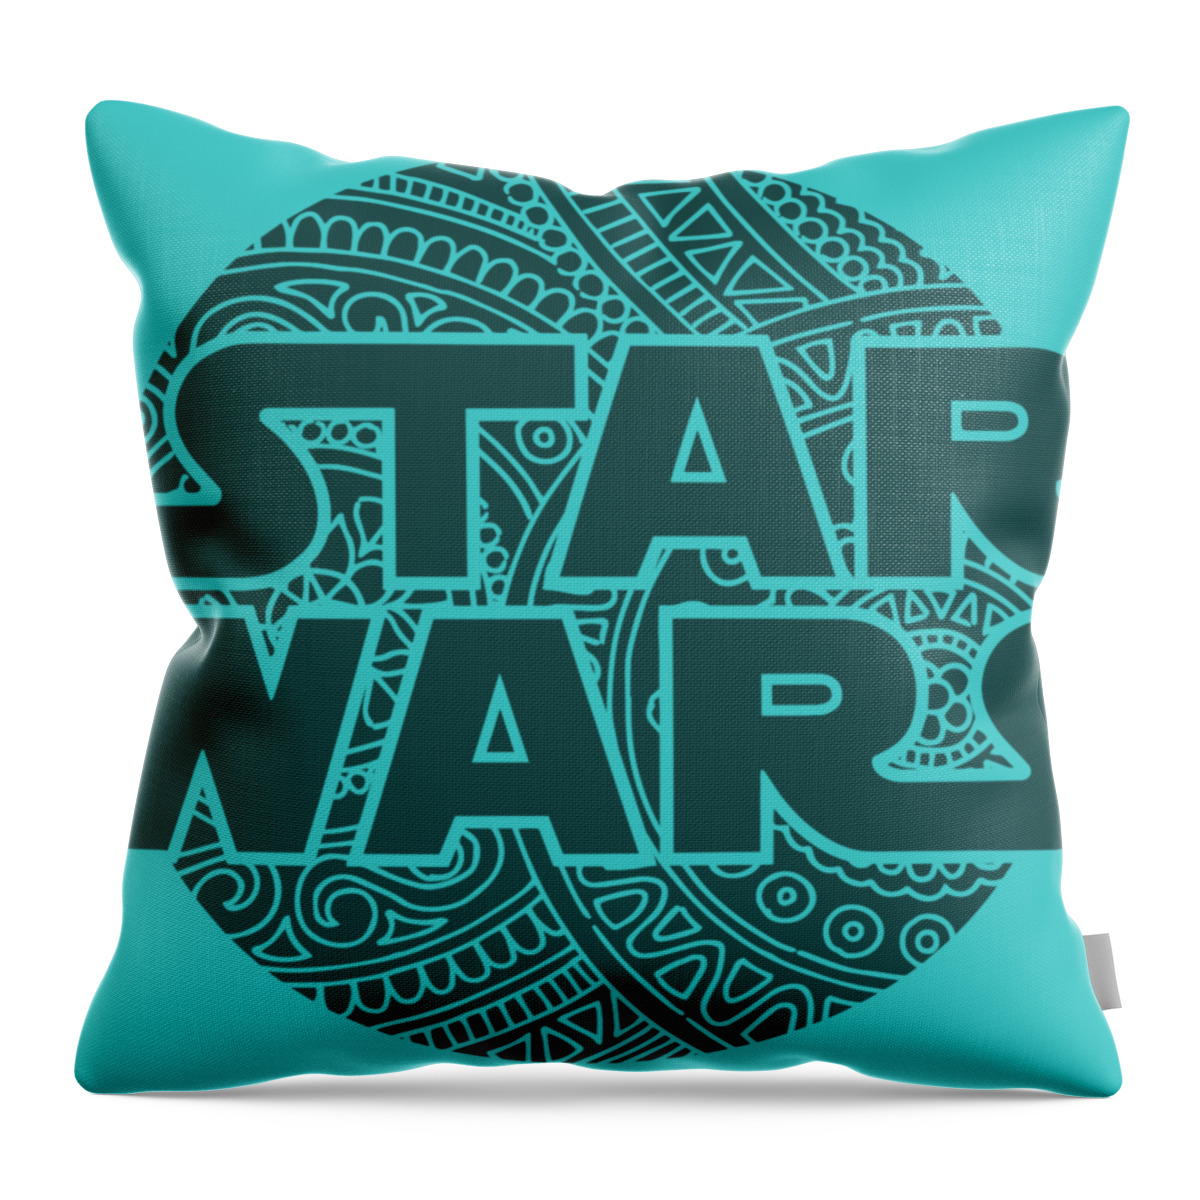 Star Wars Throw Pillow featuring the mixed media Star Wars Art - Logo - Blue 02 by Studio Grafiikka